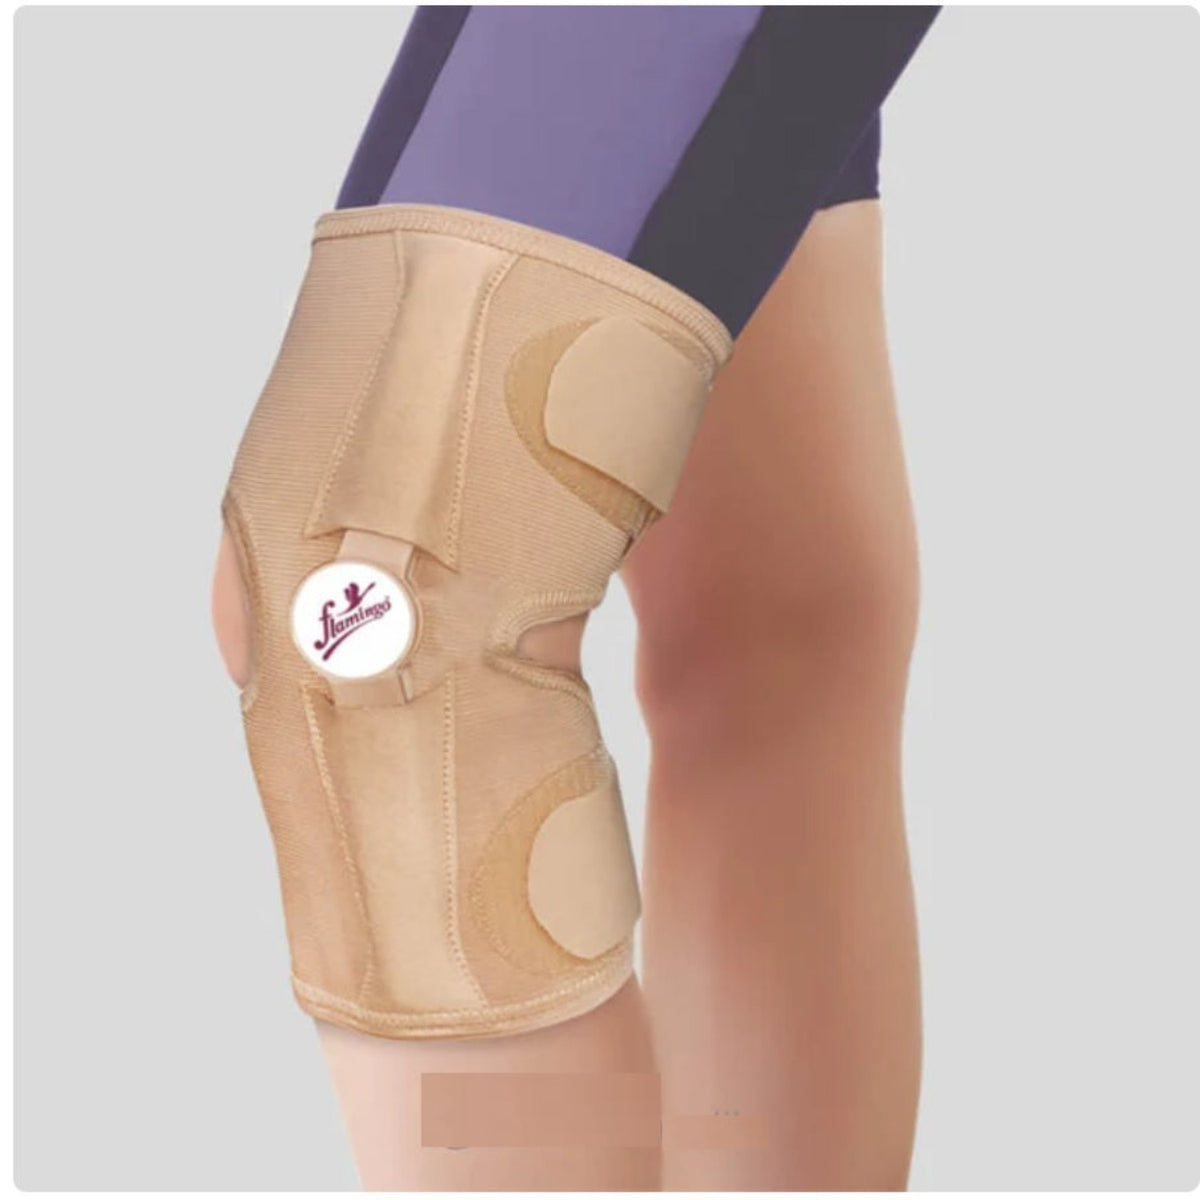 Flamingo Health Orthopaedic Elastic Knee Support Code 2020